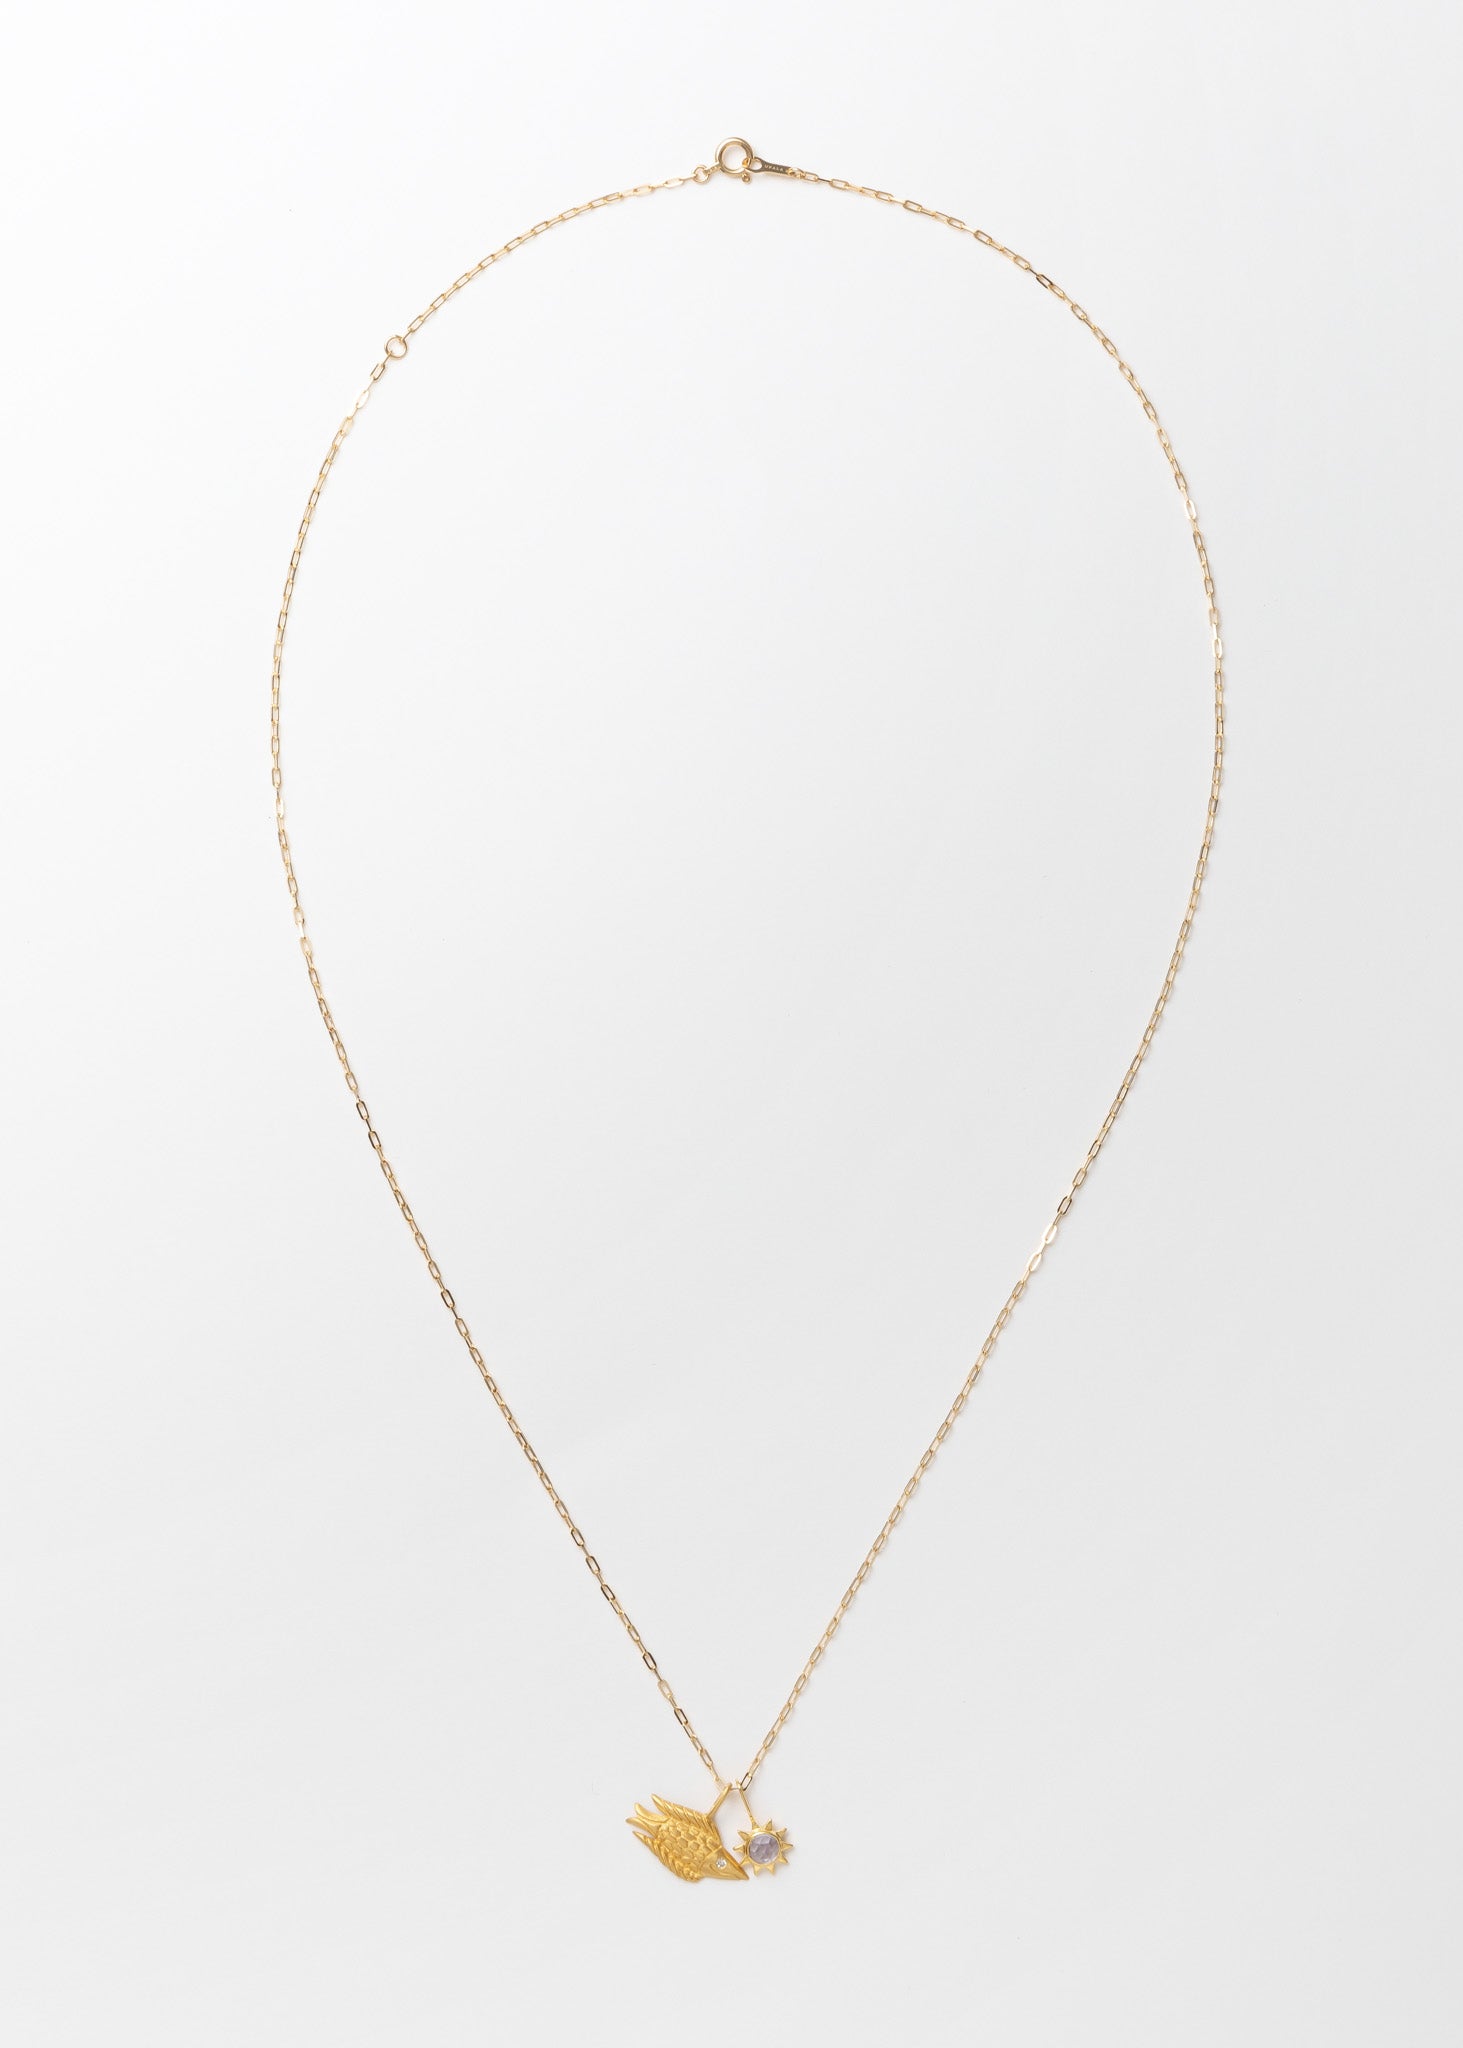 Gold Chain Necklace 50cm